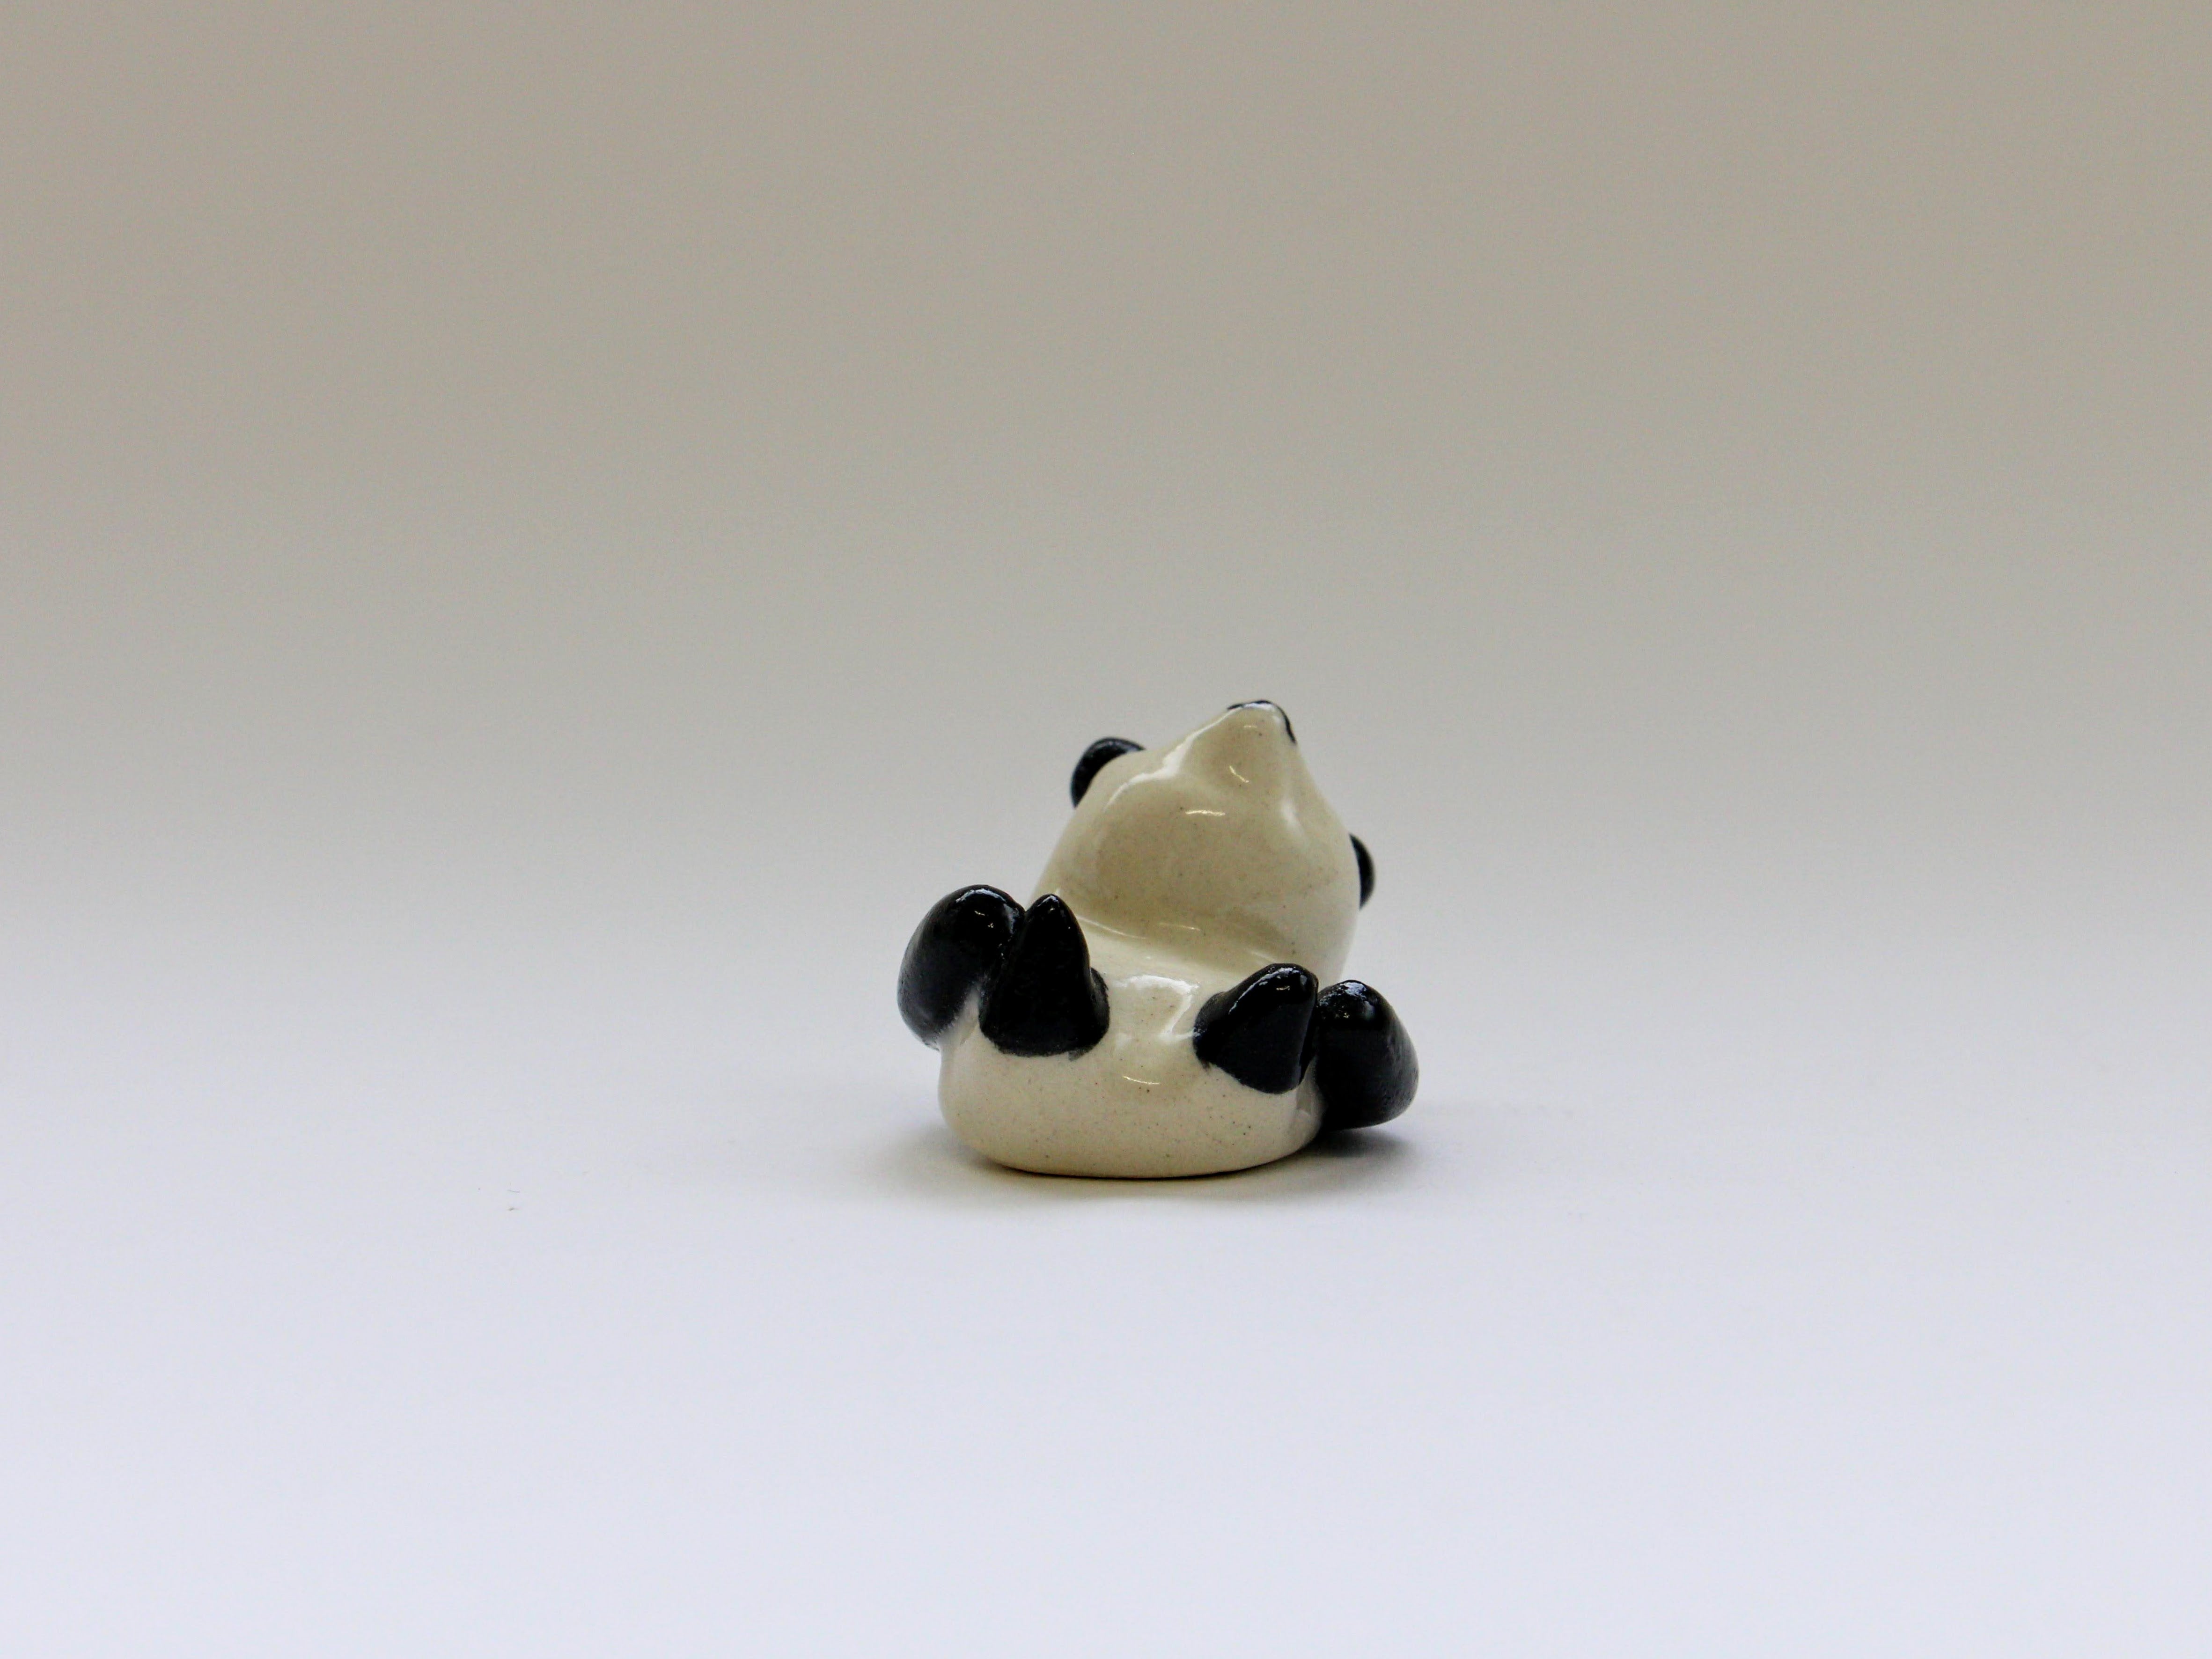 Panda chopstick rest D [Ryo Makita]